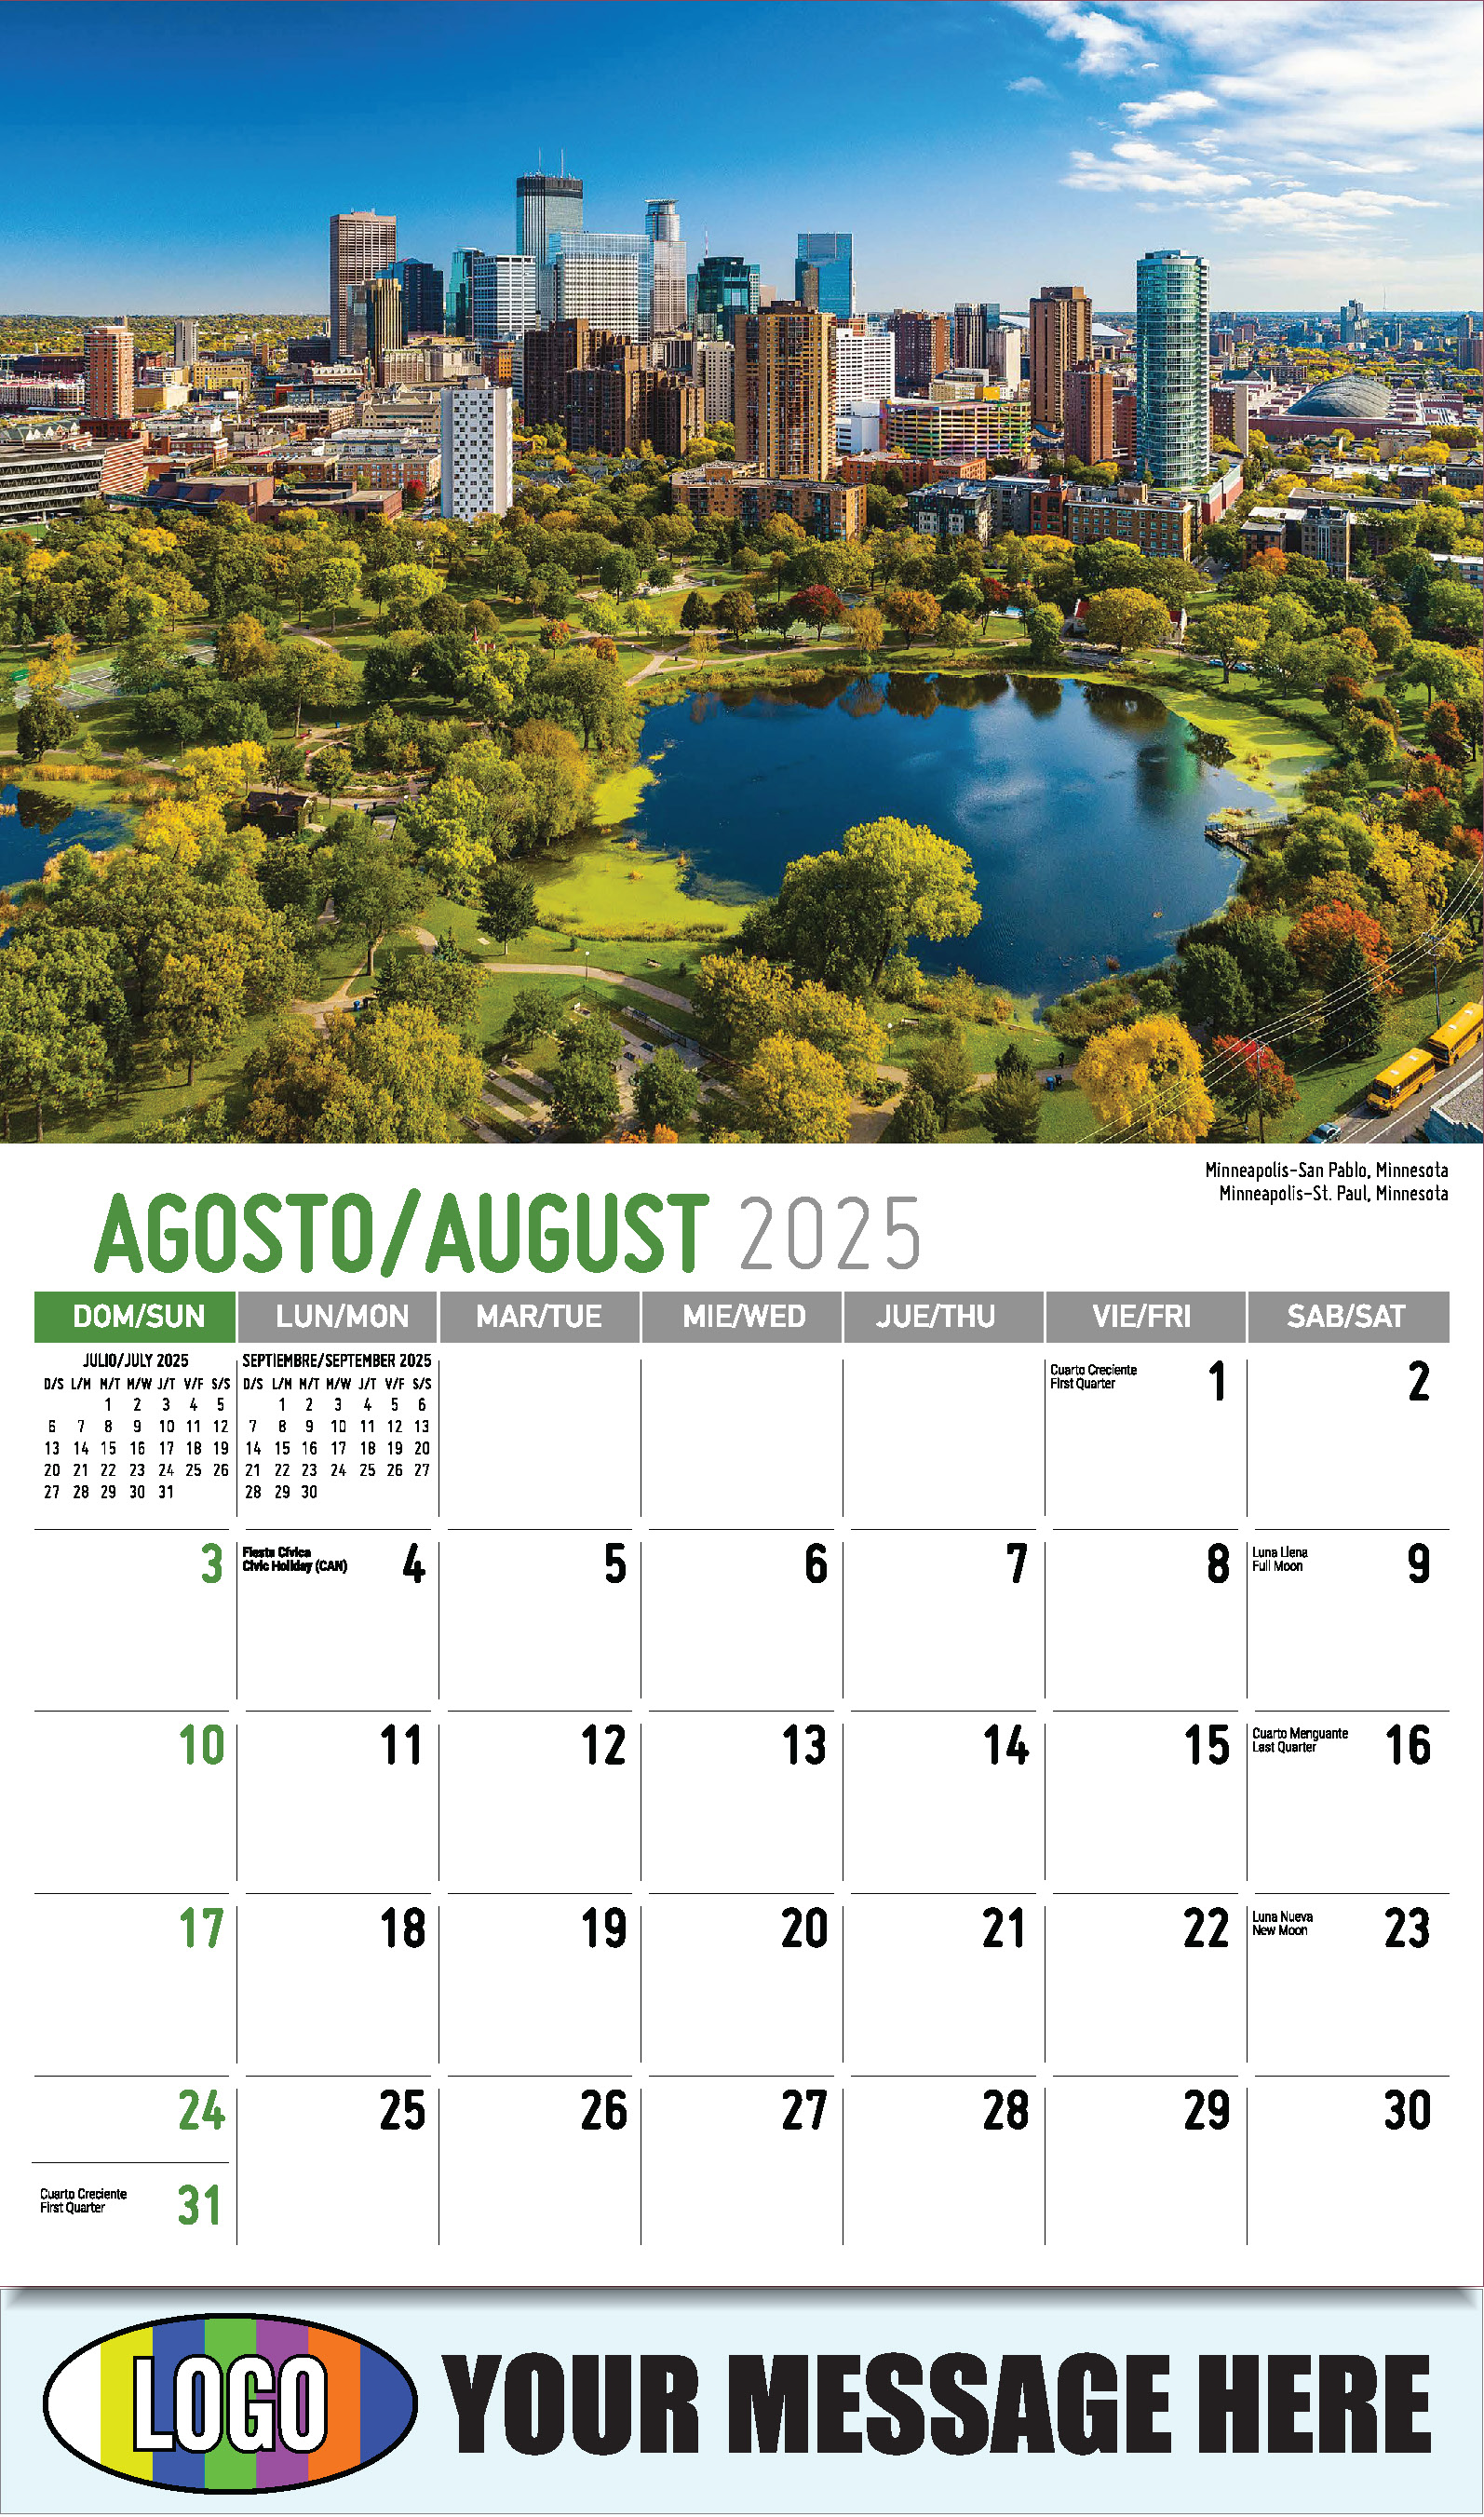 Scenes of America 2025 Bilingual Business Promo Calendar - August